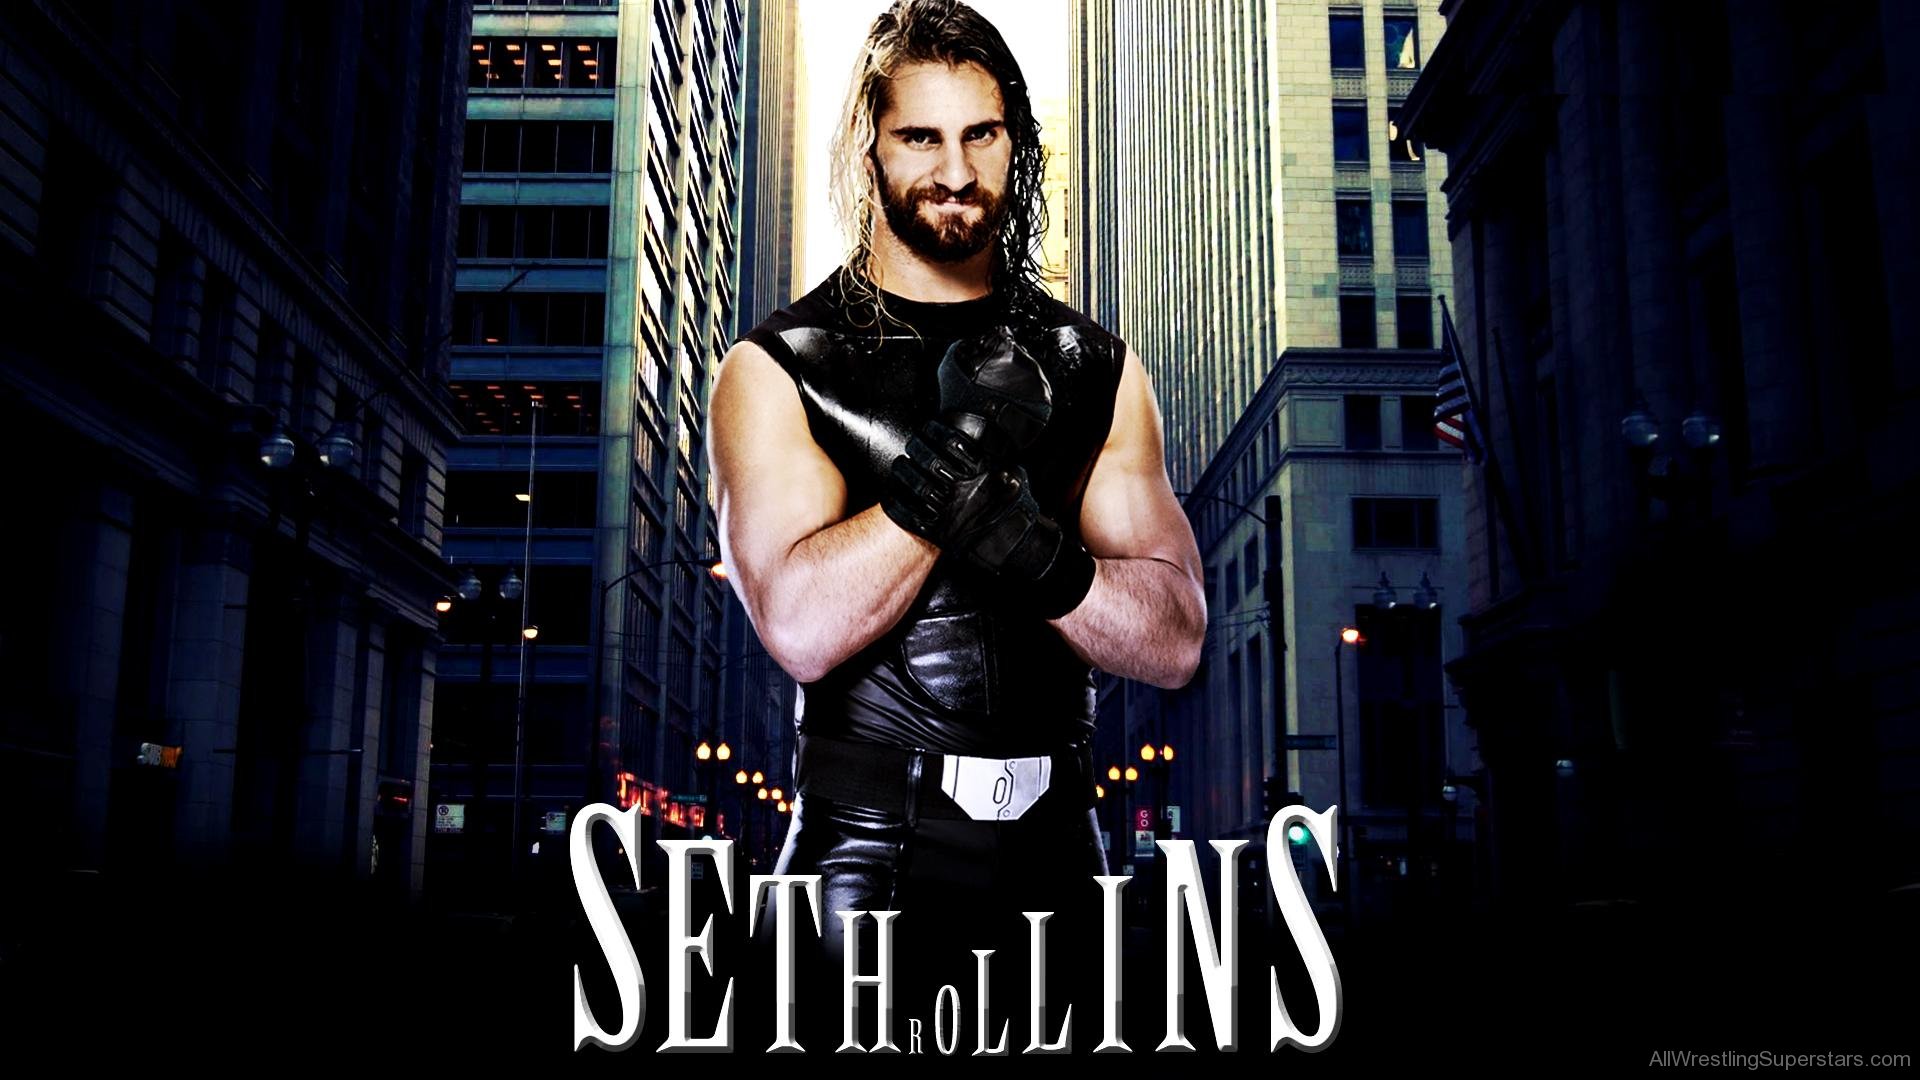 Wwe Superstar Seth Rollins